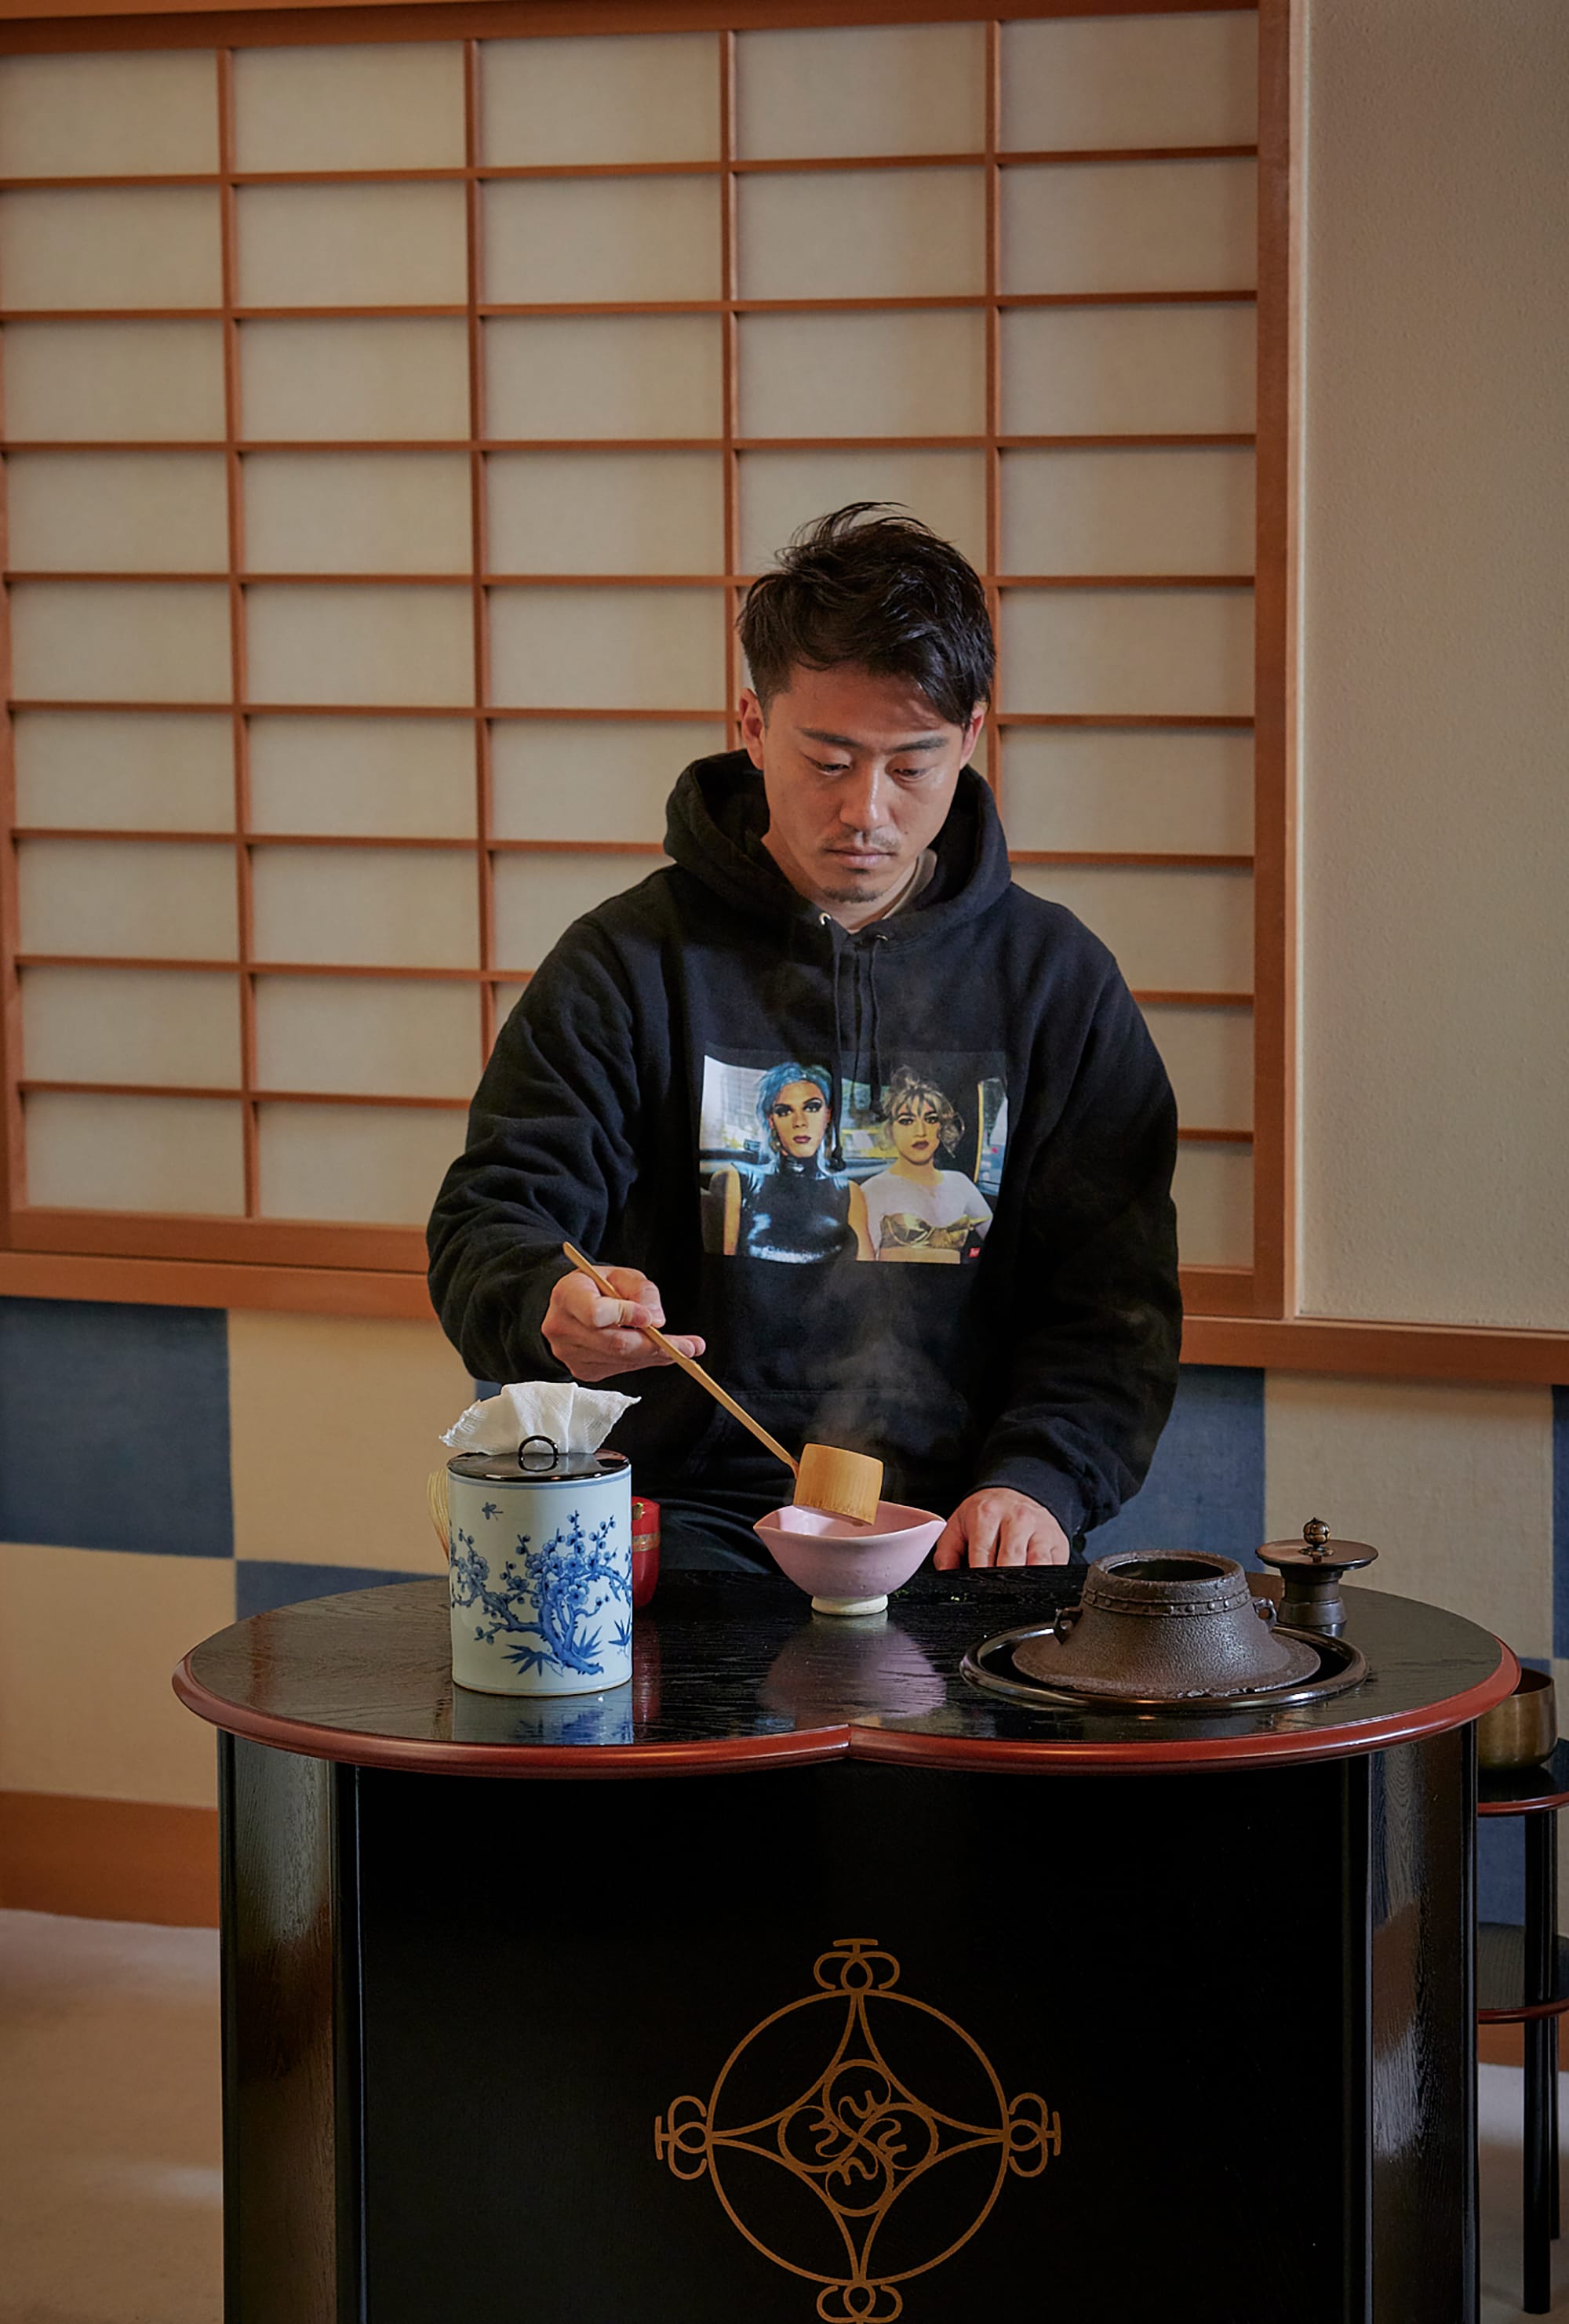 Each athlete made tea. It was the first time to make tea in ryureiseki for Maeda.